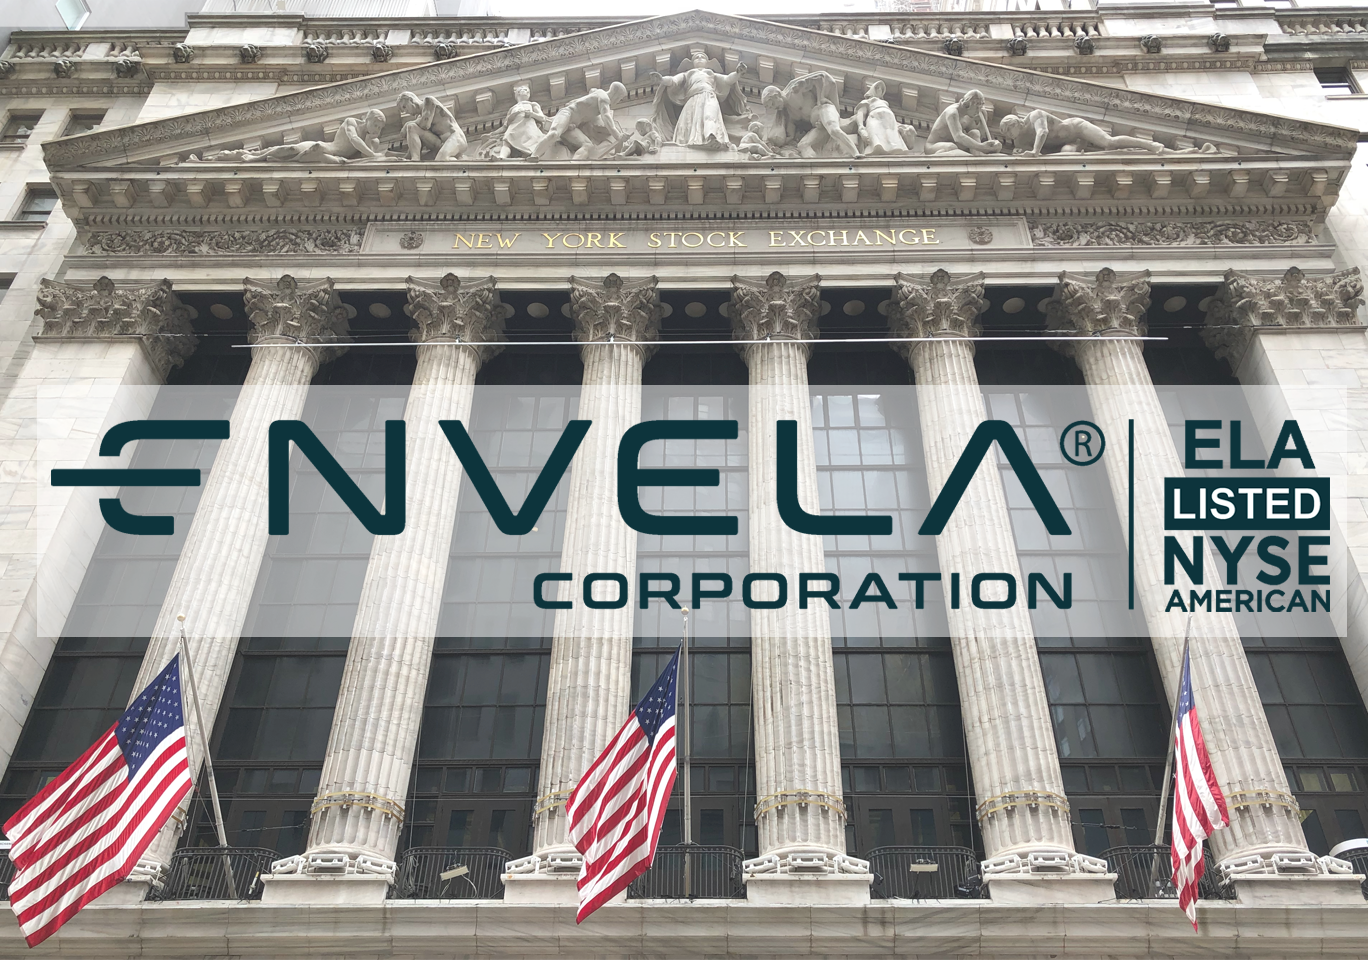 Envela Corporation, Tuesday, March 23, 2021, Press release picture